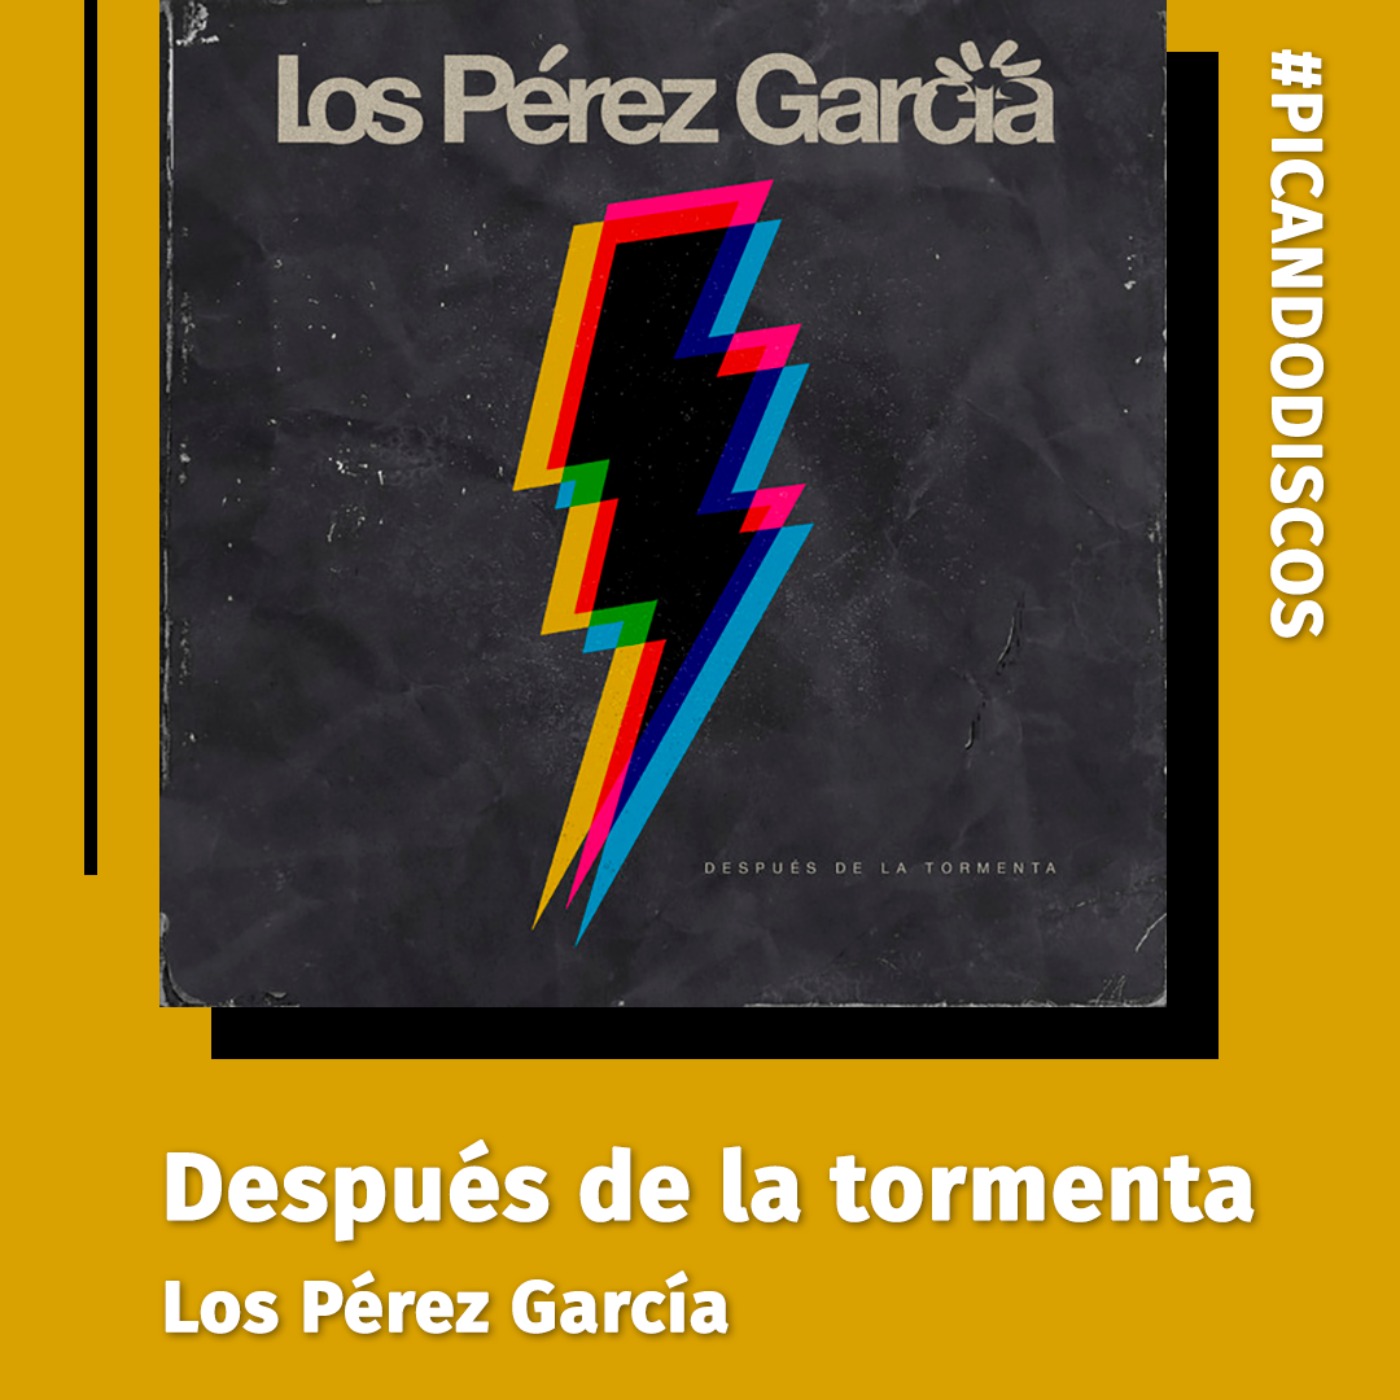 cover art for "Después de la tormenta", Los Pérez García